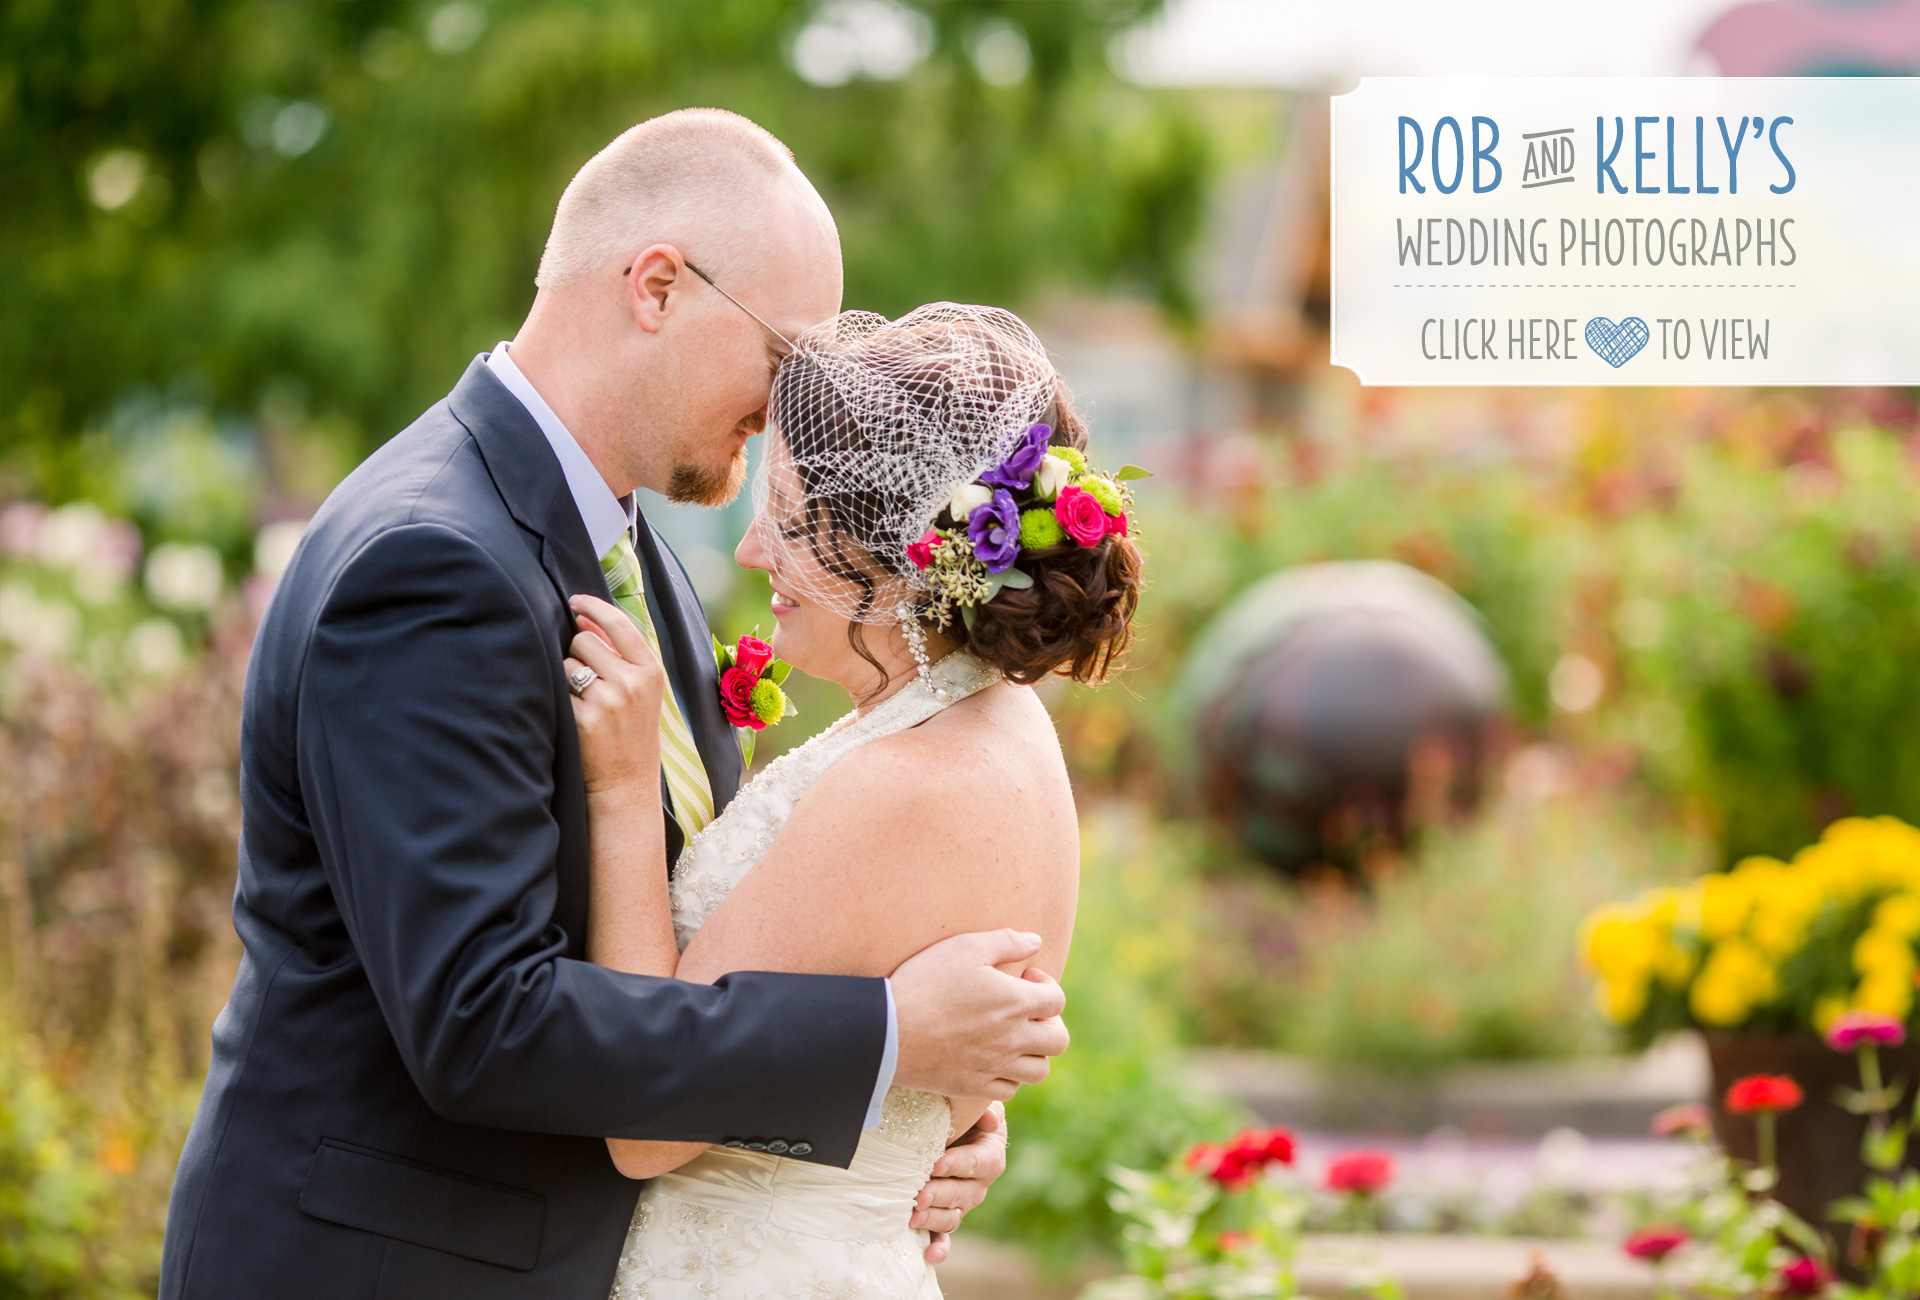 Rob and Kelly | Intimate Backyard Wedding in Holt, MI